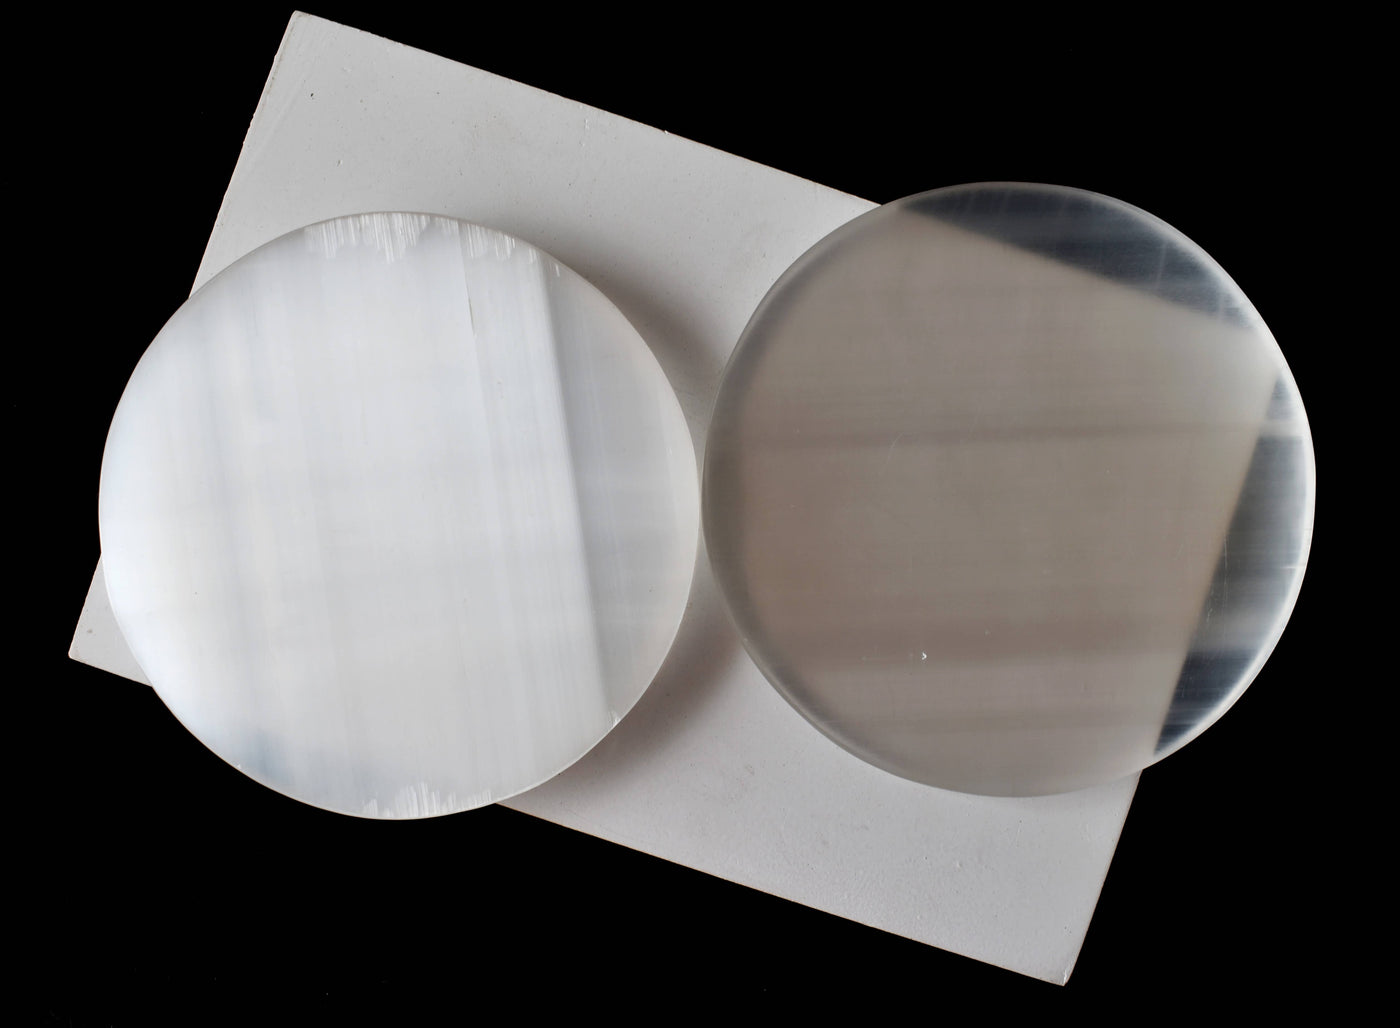 3 inches Selenite Plate, White Round Plain Selenite Charging Plate